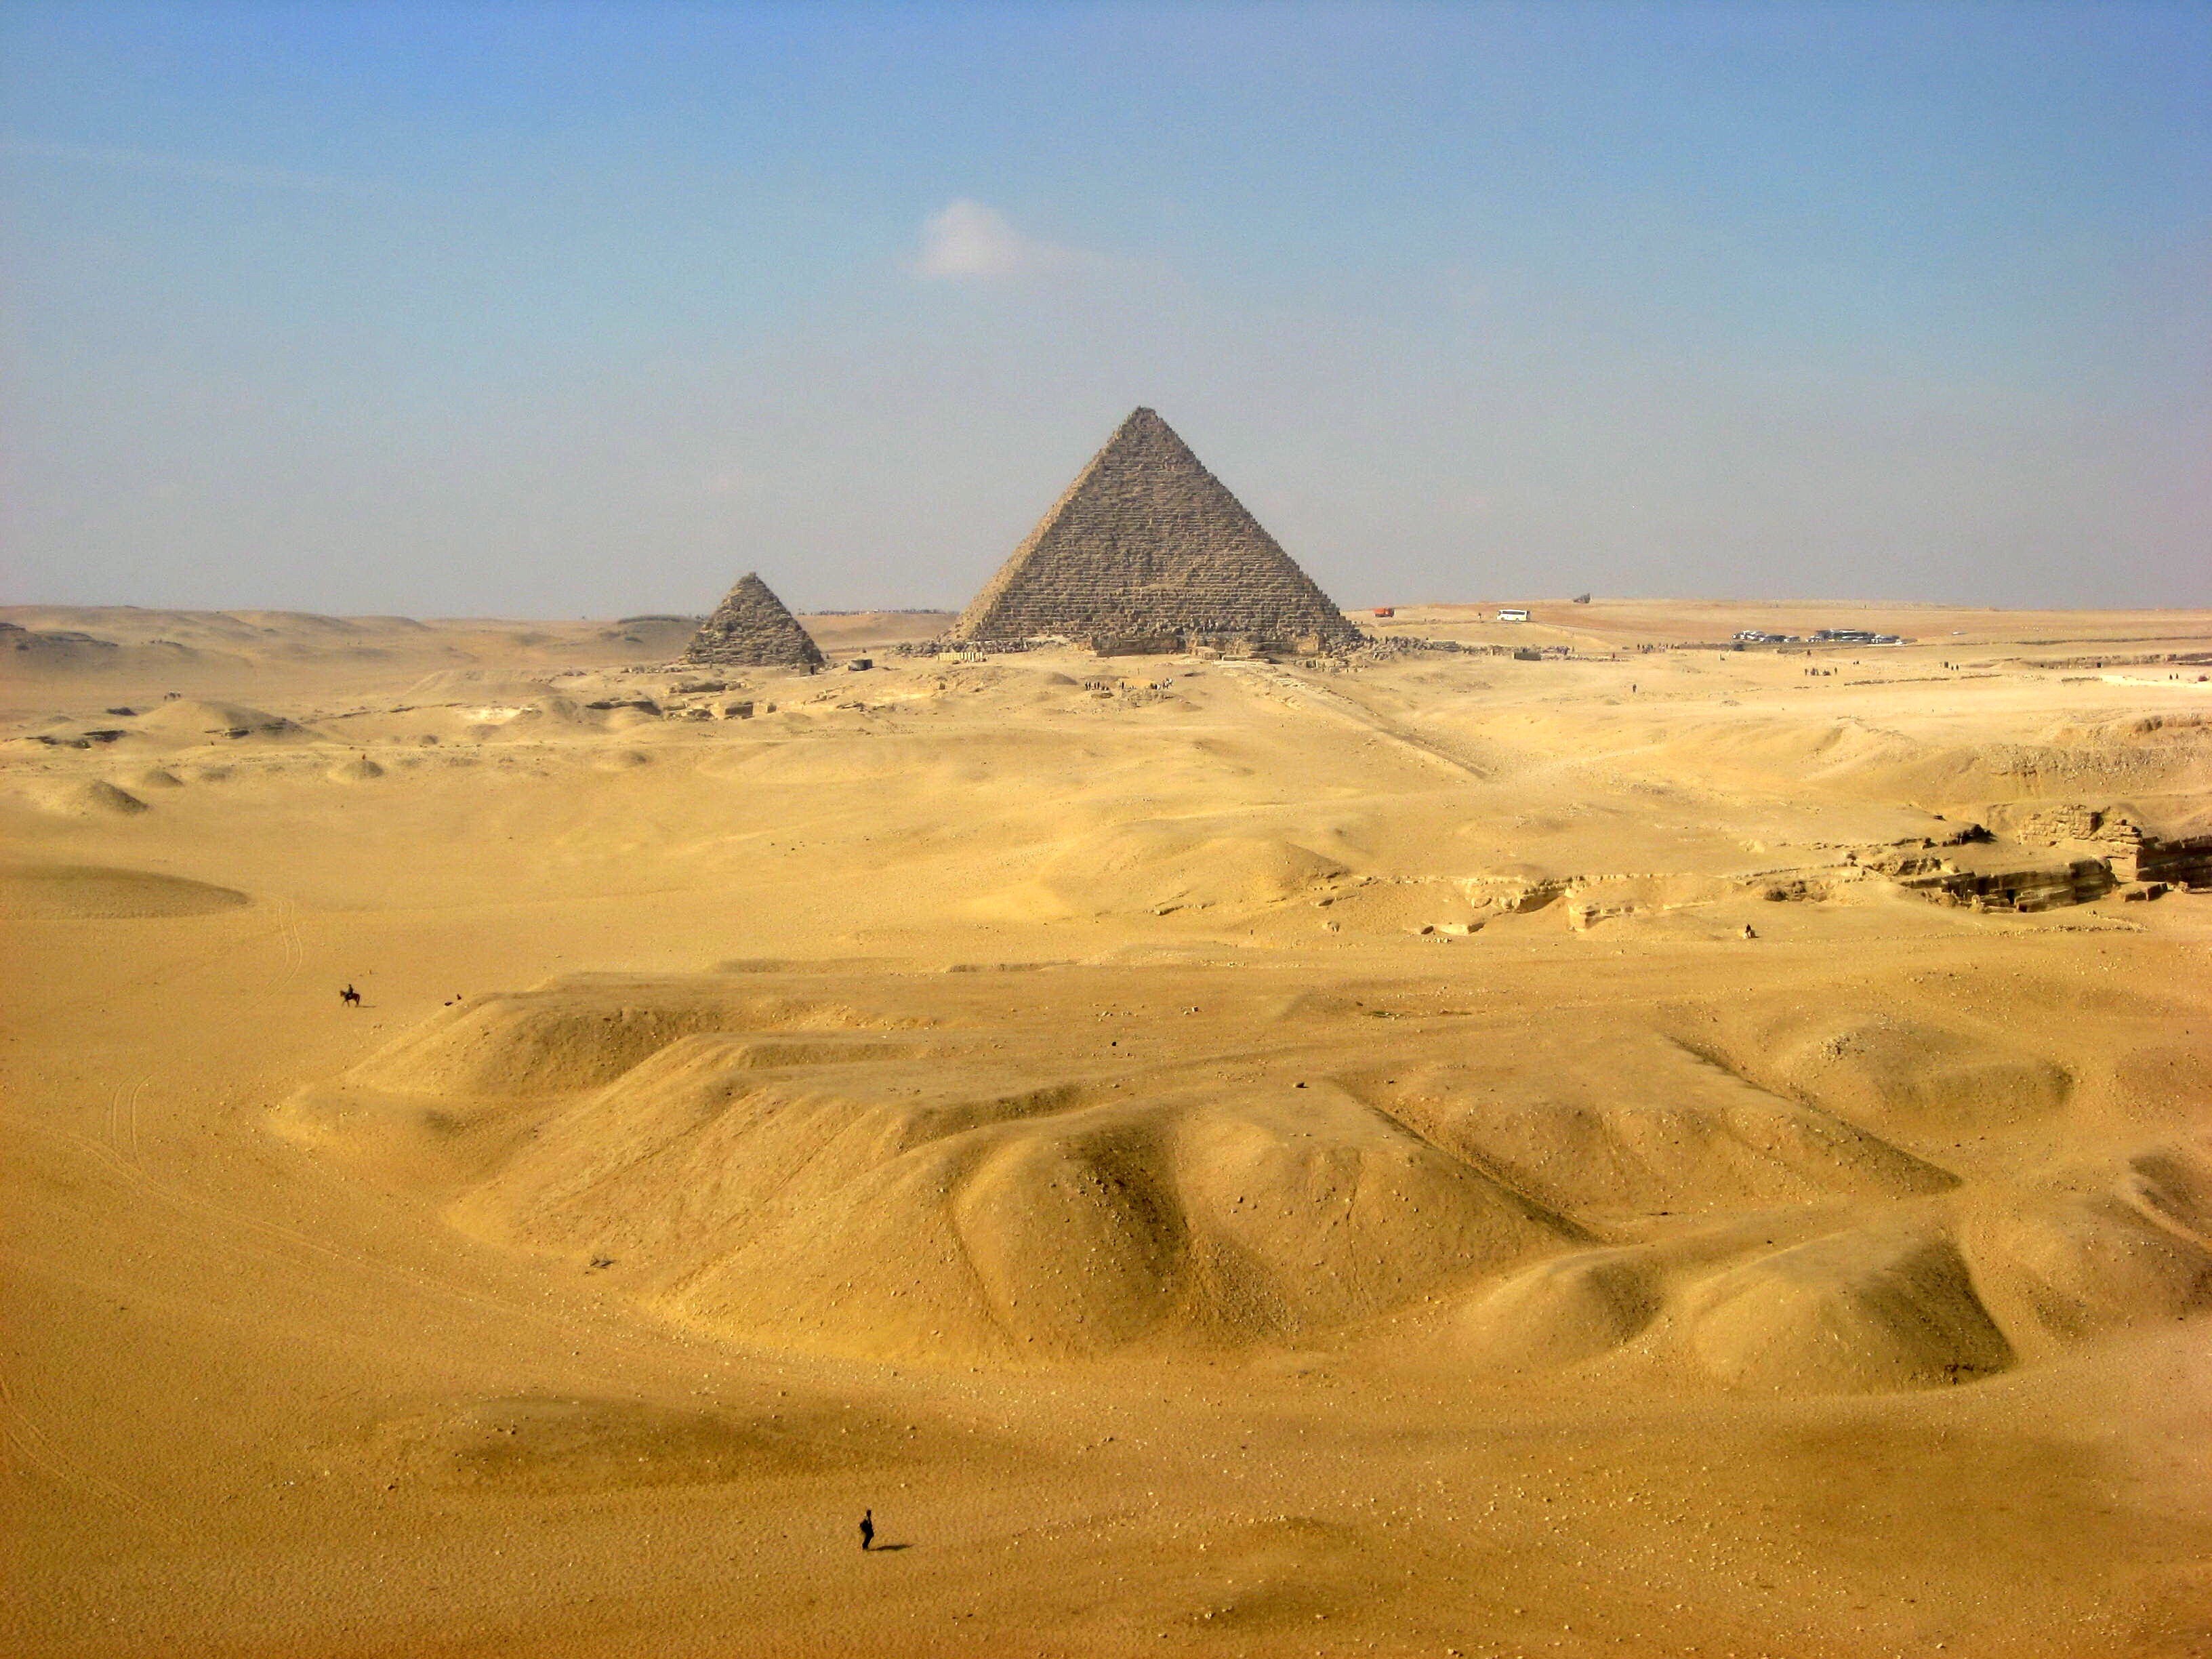 expansive-desert-with-pyramid-2022-11-02-16-20-39-utc-4442.jpg